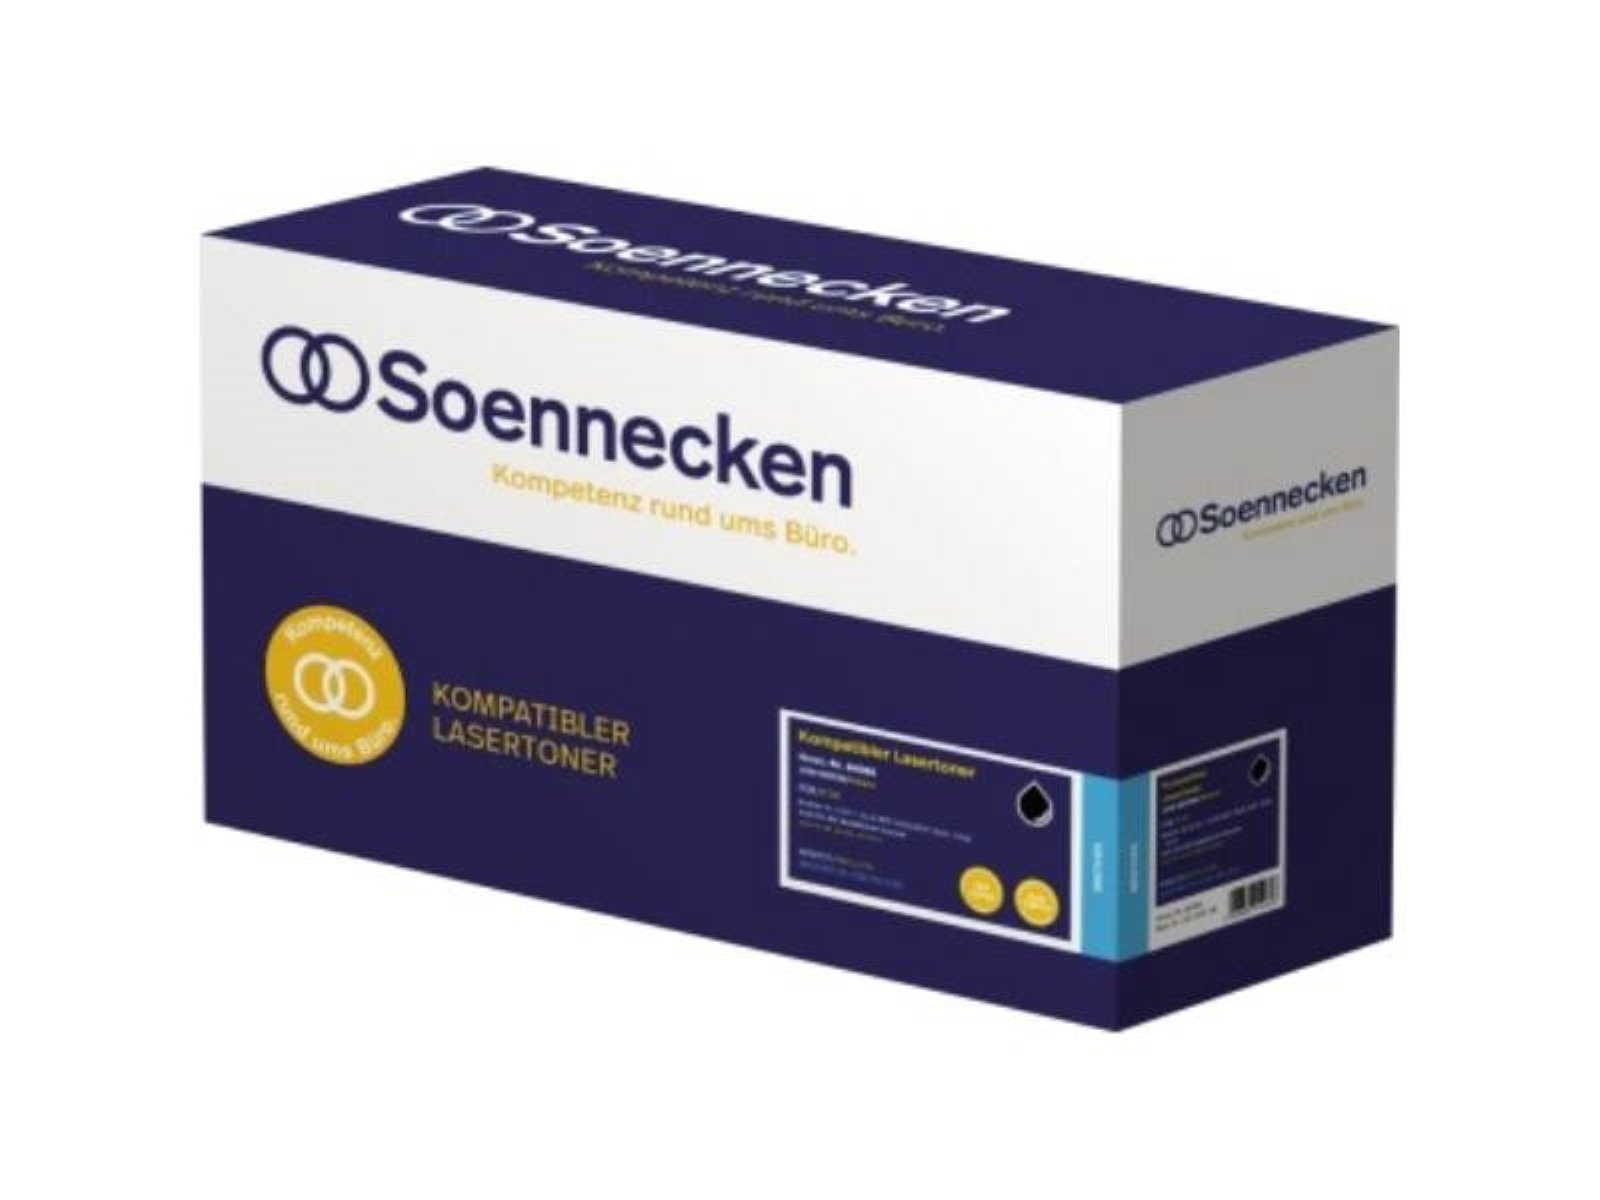 Toner Tonerkartusche 1.000 84066 Sei Soennecken TN-1050 84066 SOENNECKEN Brother ca. Soennecken